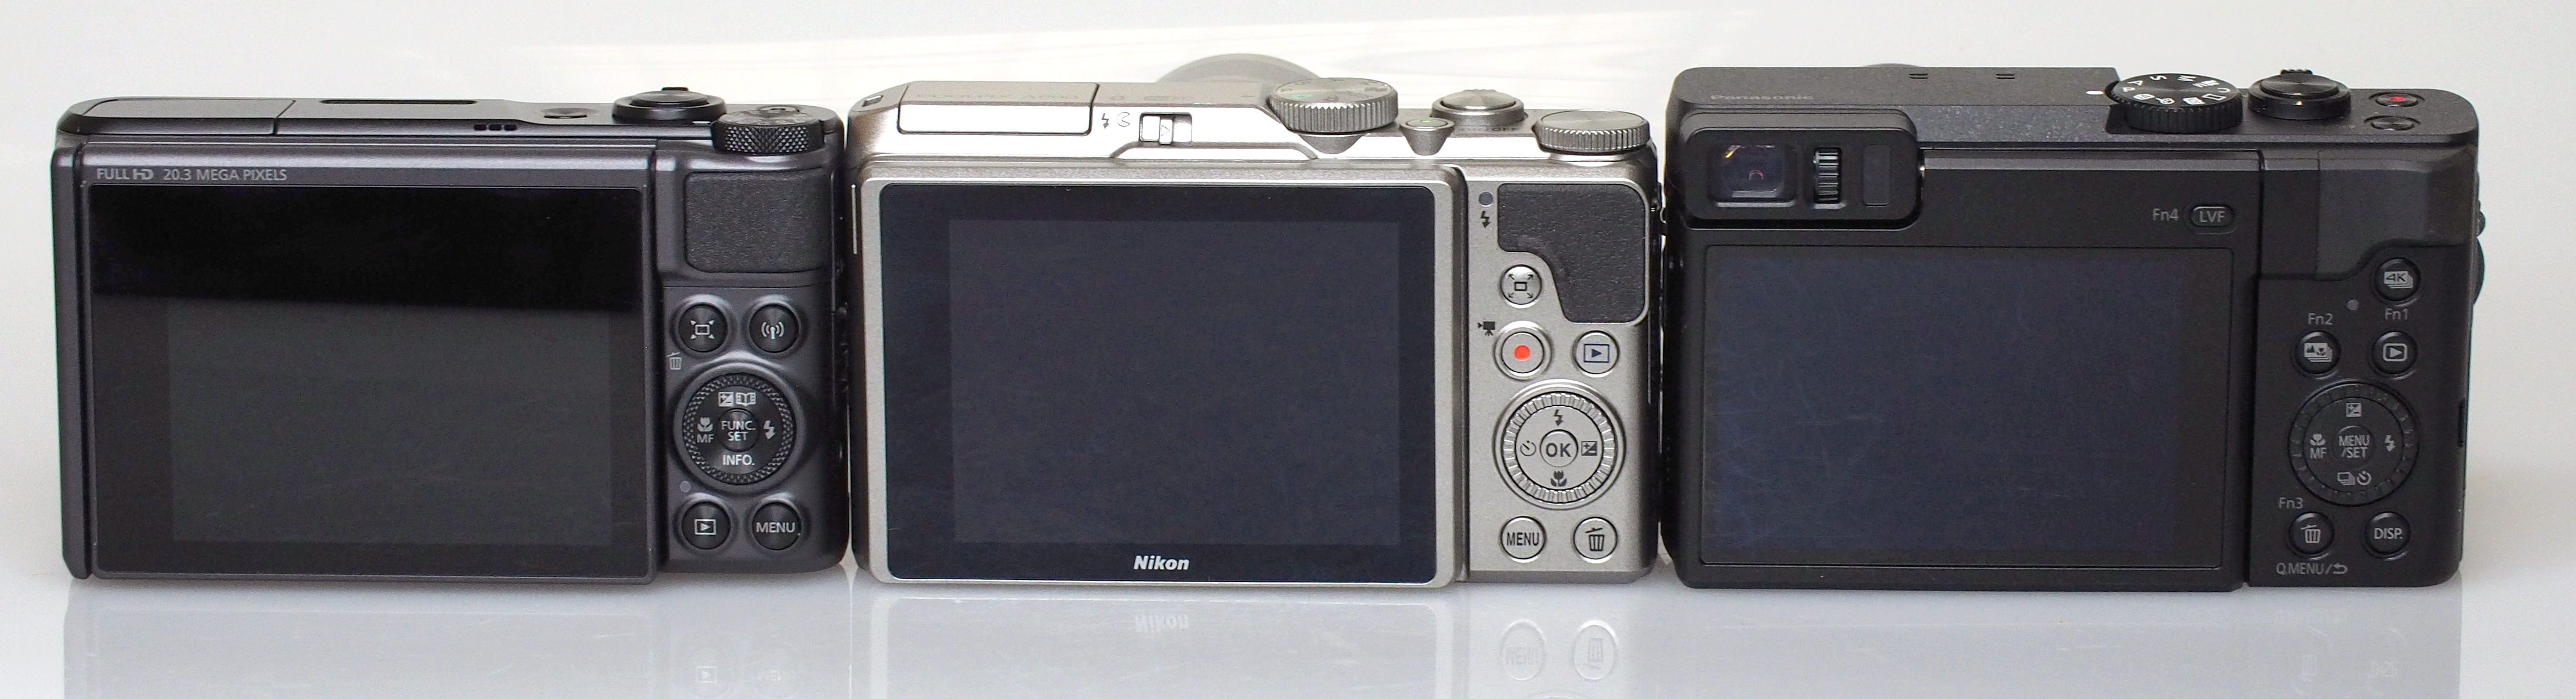 Highres Canon Powershot S X730 Hs Vs Nikon Coolpix A900 Vs Panasonic Lumix T Z90 4 1496652406